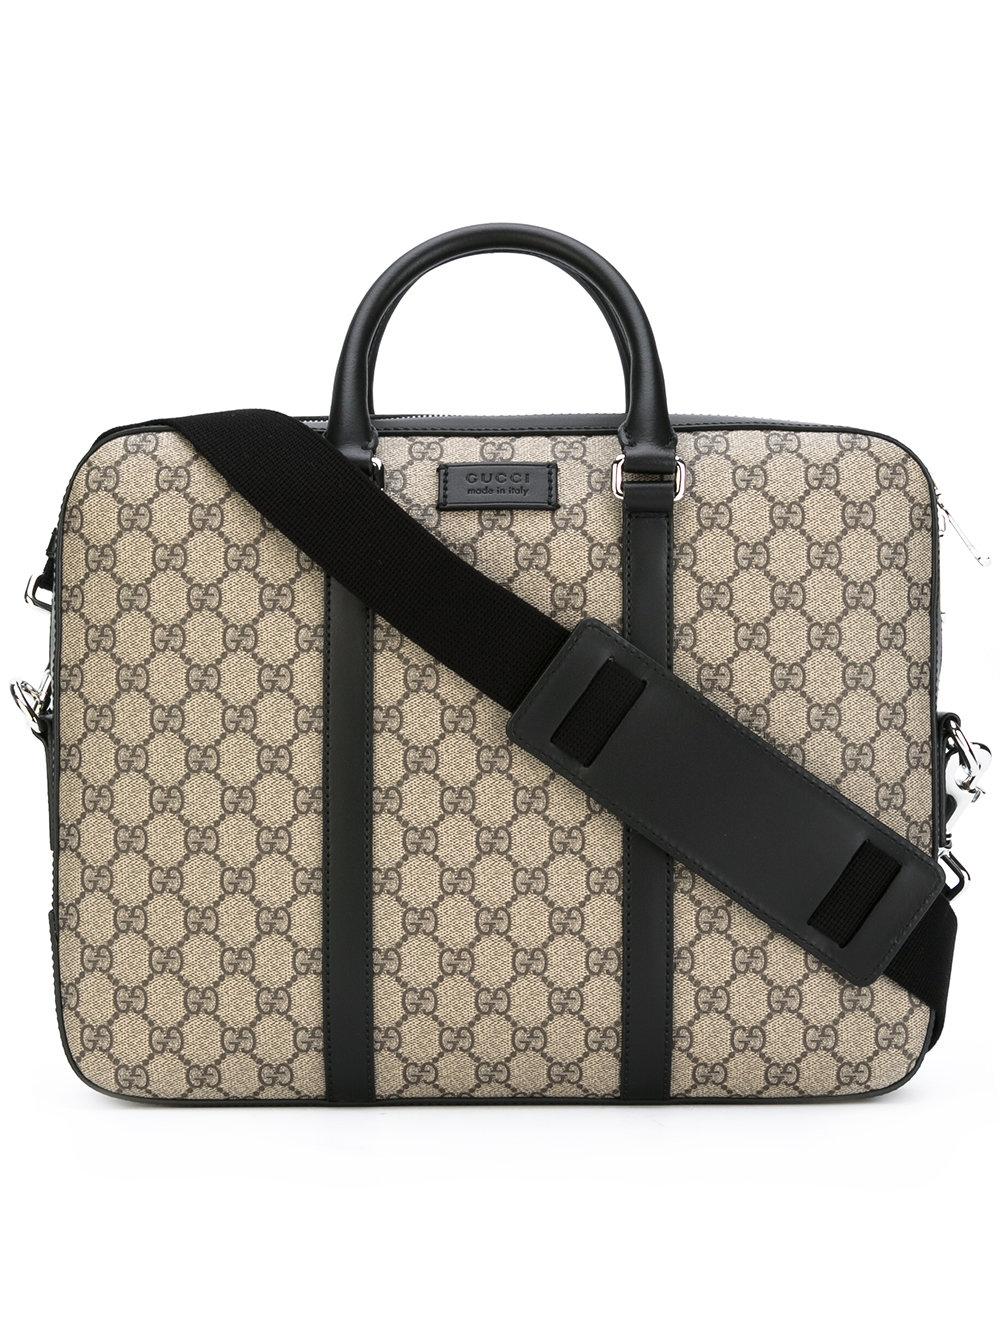 Lyst - Gucci Gg Supreme Laptop Bag in Black